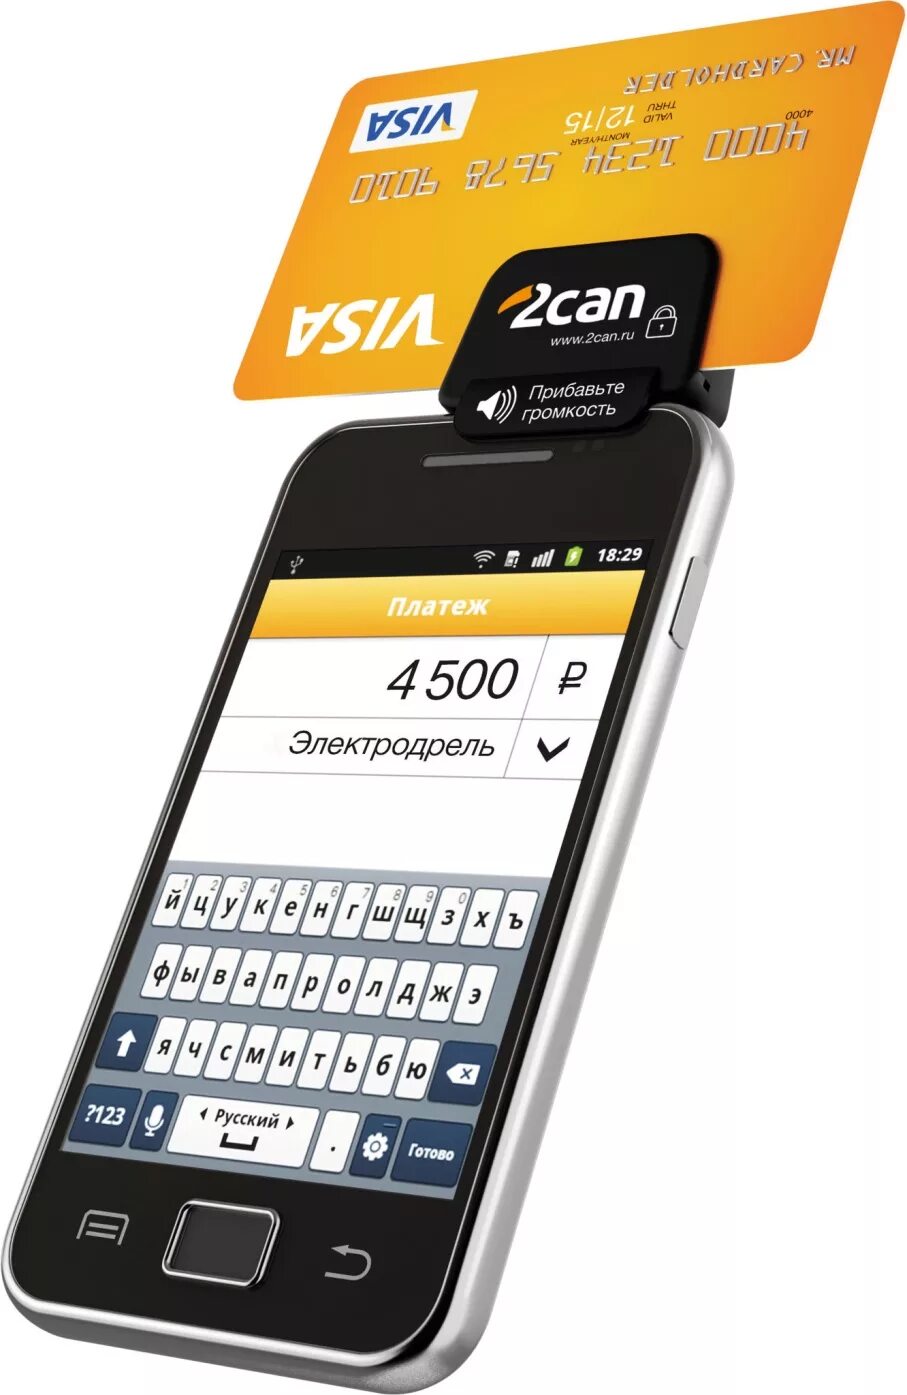 POS-терминал 2can v20. Платежный терминал 2can. Мобильный терминал эквайринга. 2can терминал. Оплата через мобильный терминал